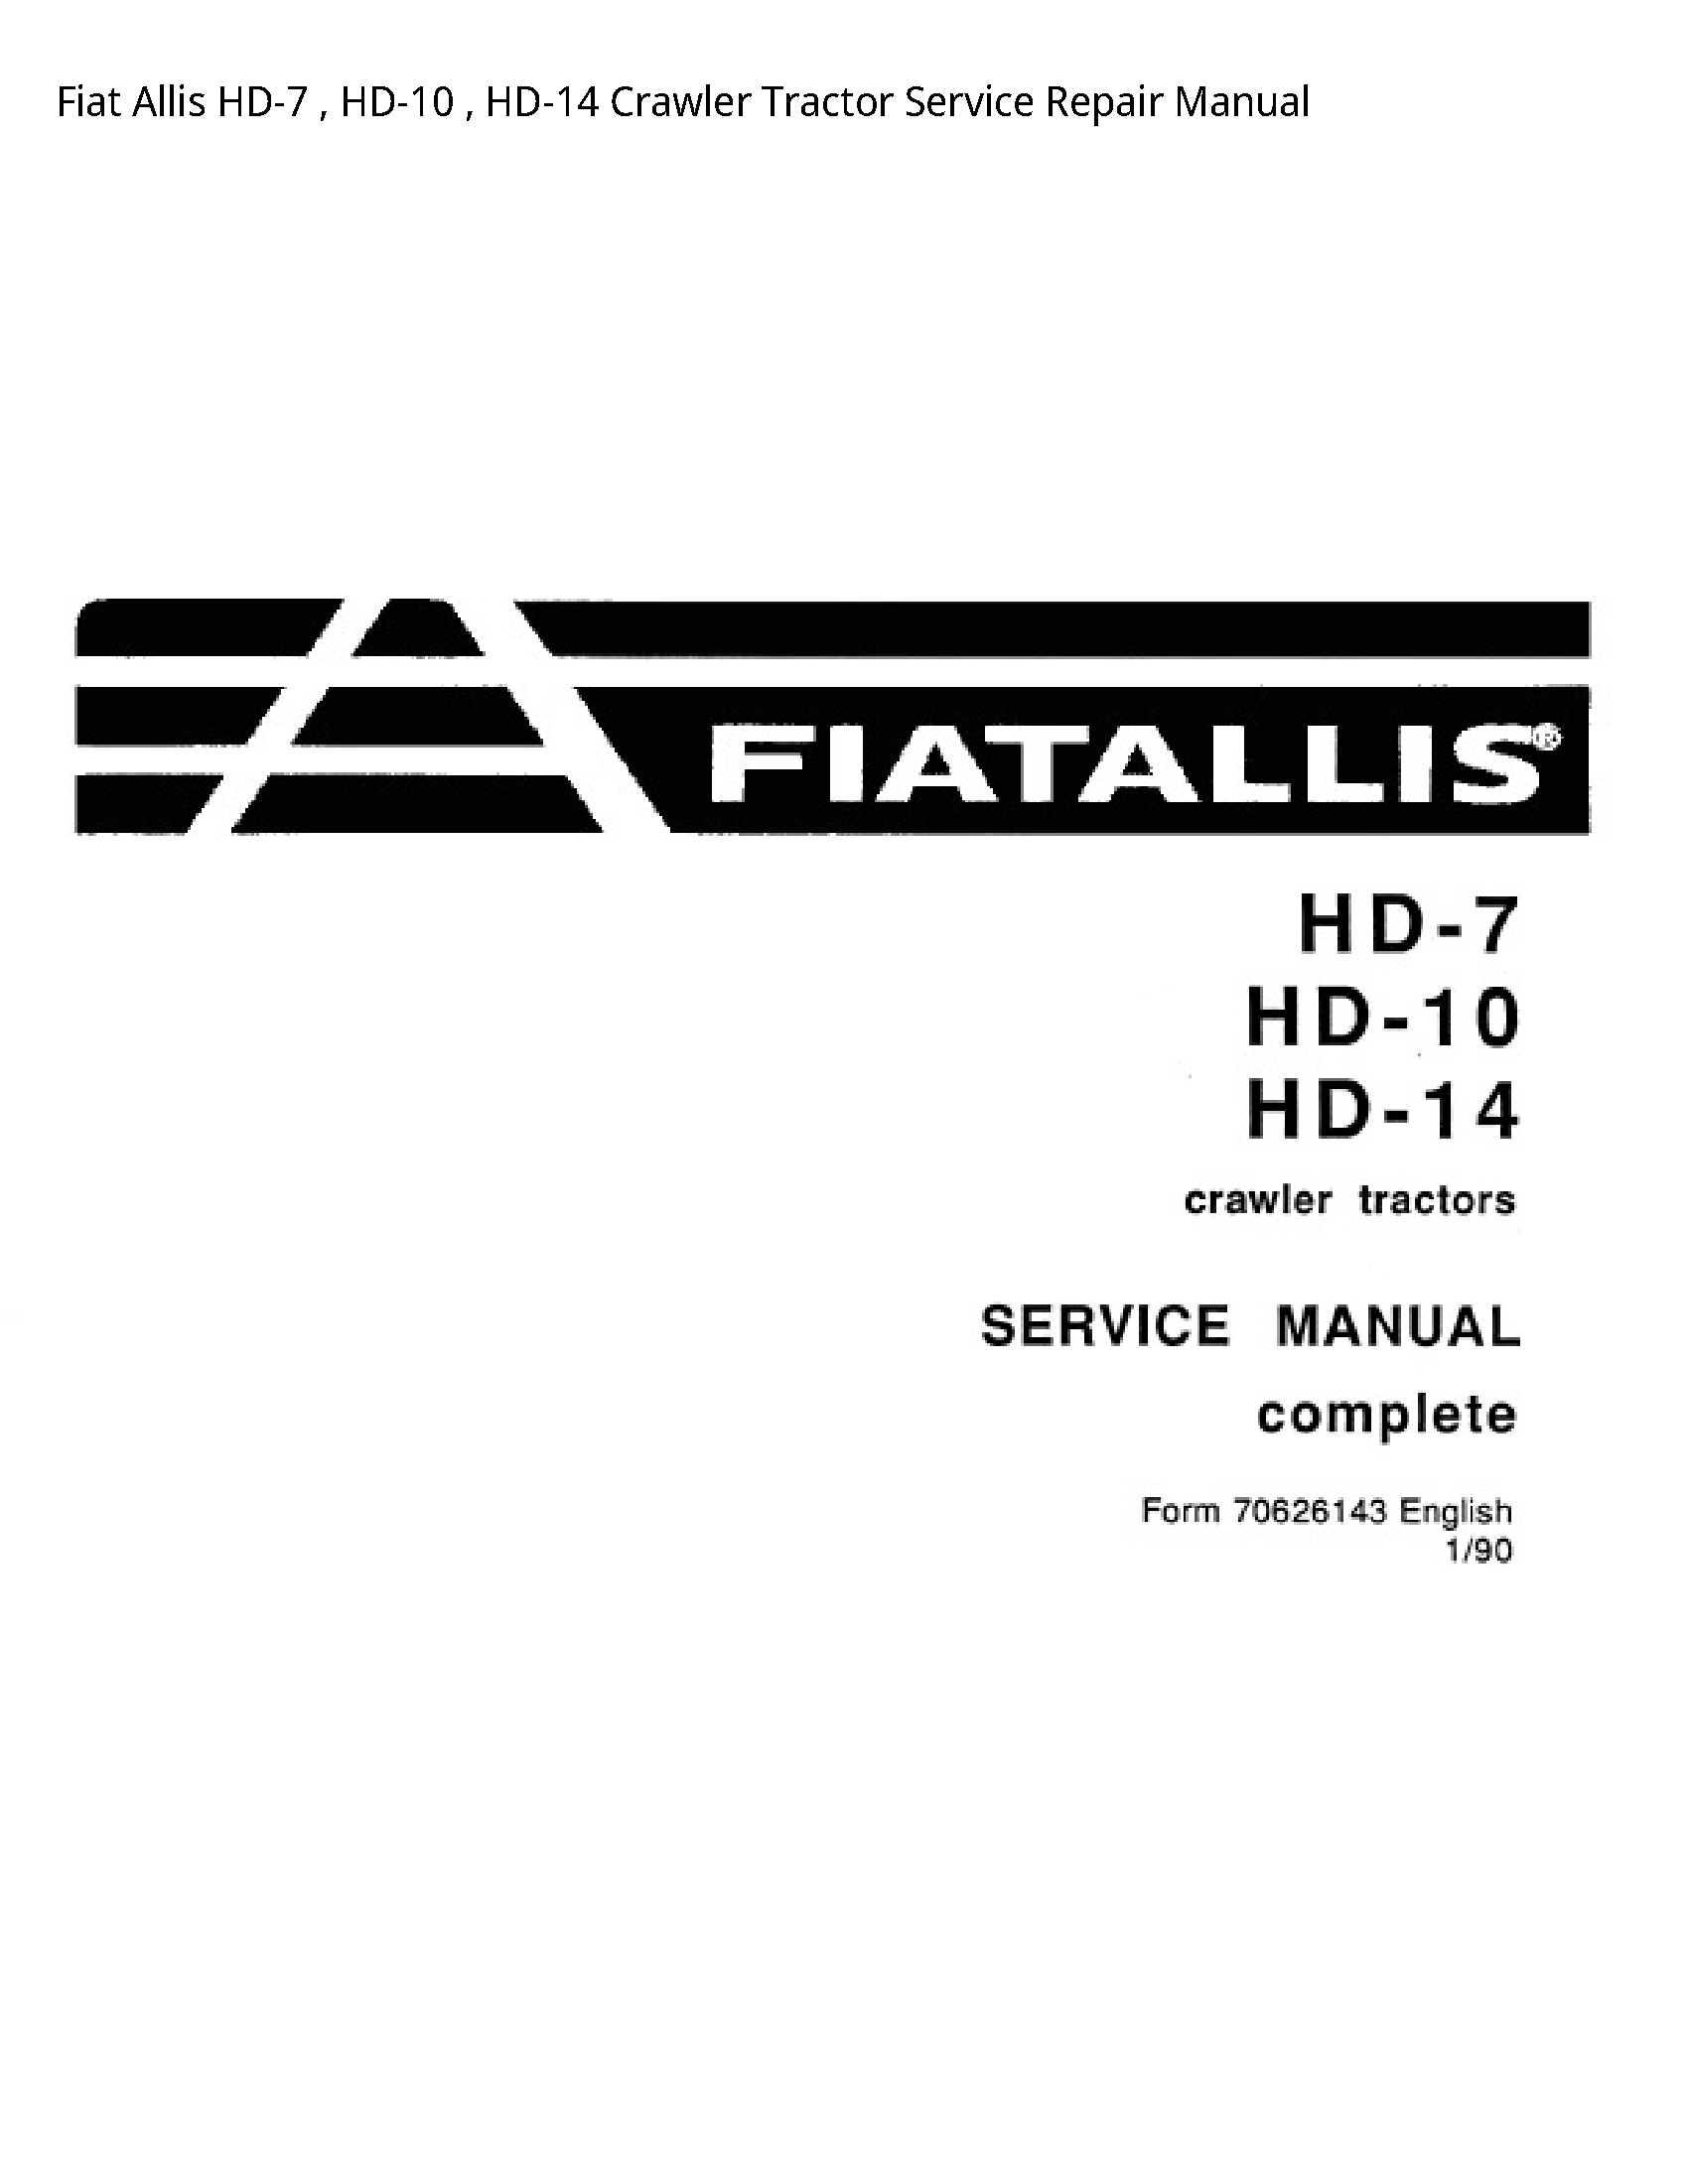 Fiat Allis HD-7 Crawler Tractor manual